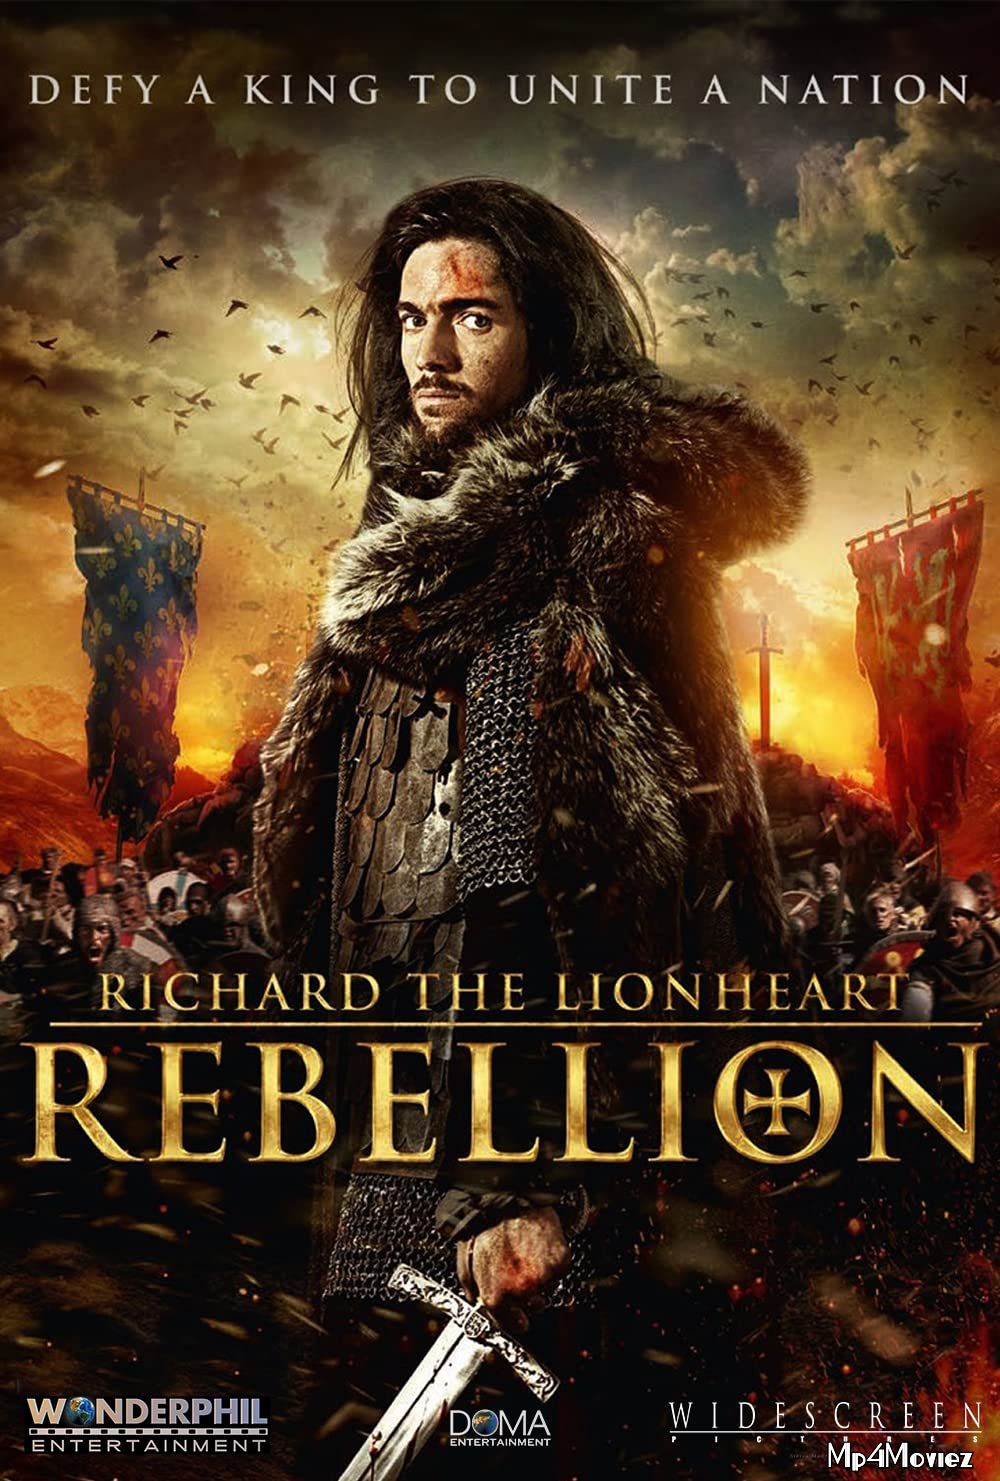 Richard the Lionheart Rebellion 2015 Hindi Dubbed Full Movie download full movie